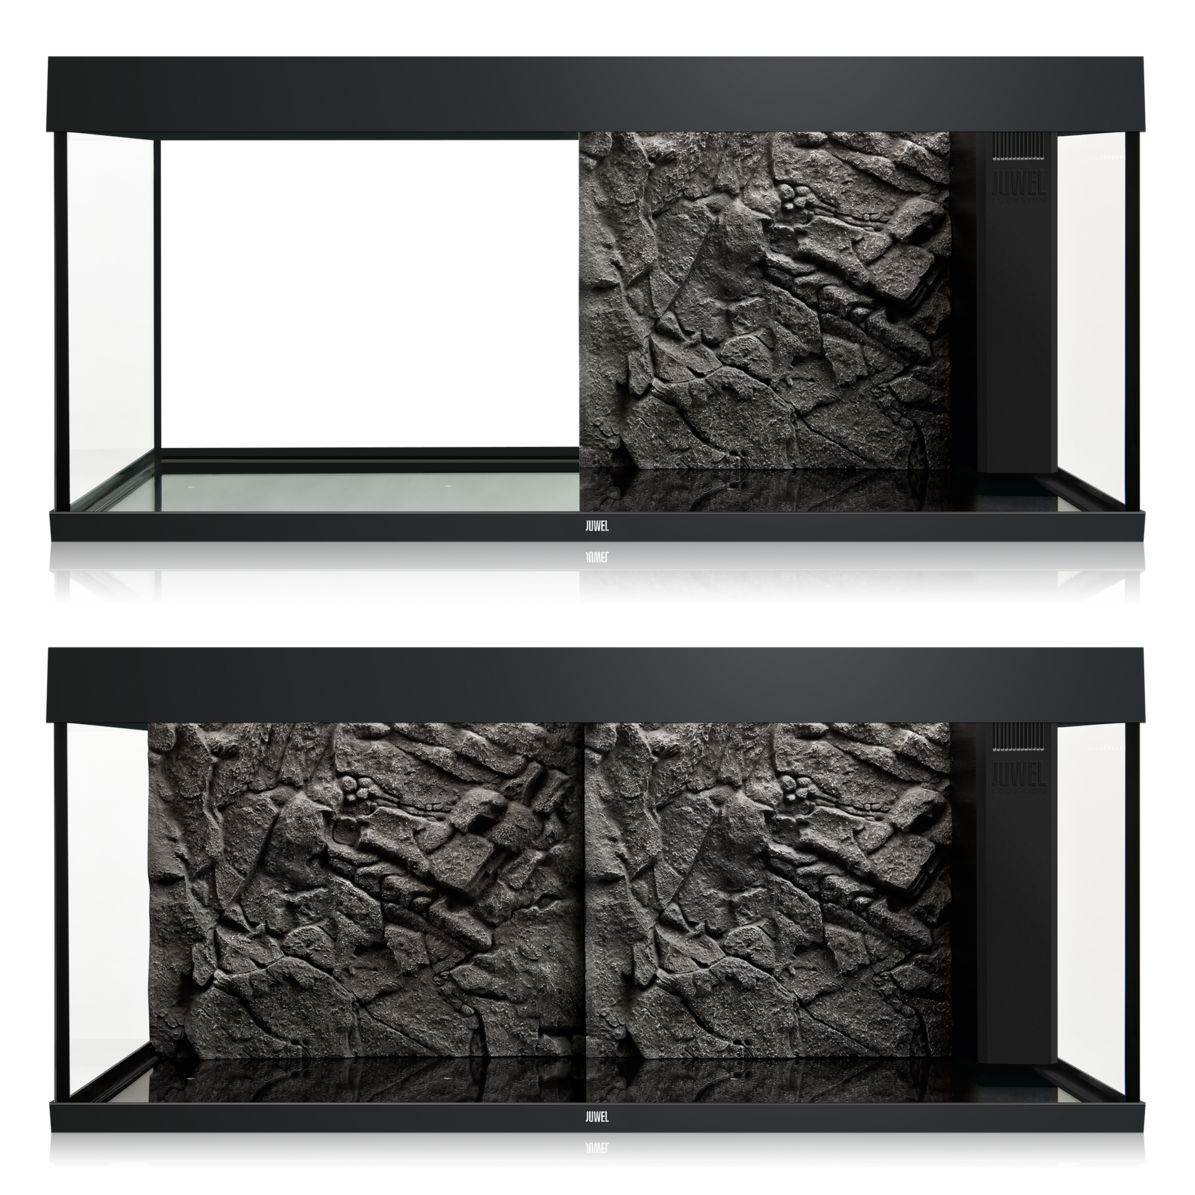 Juwel Background Stone Granite - Strukturrückwand 60x55cm